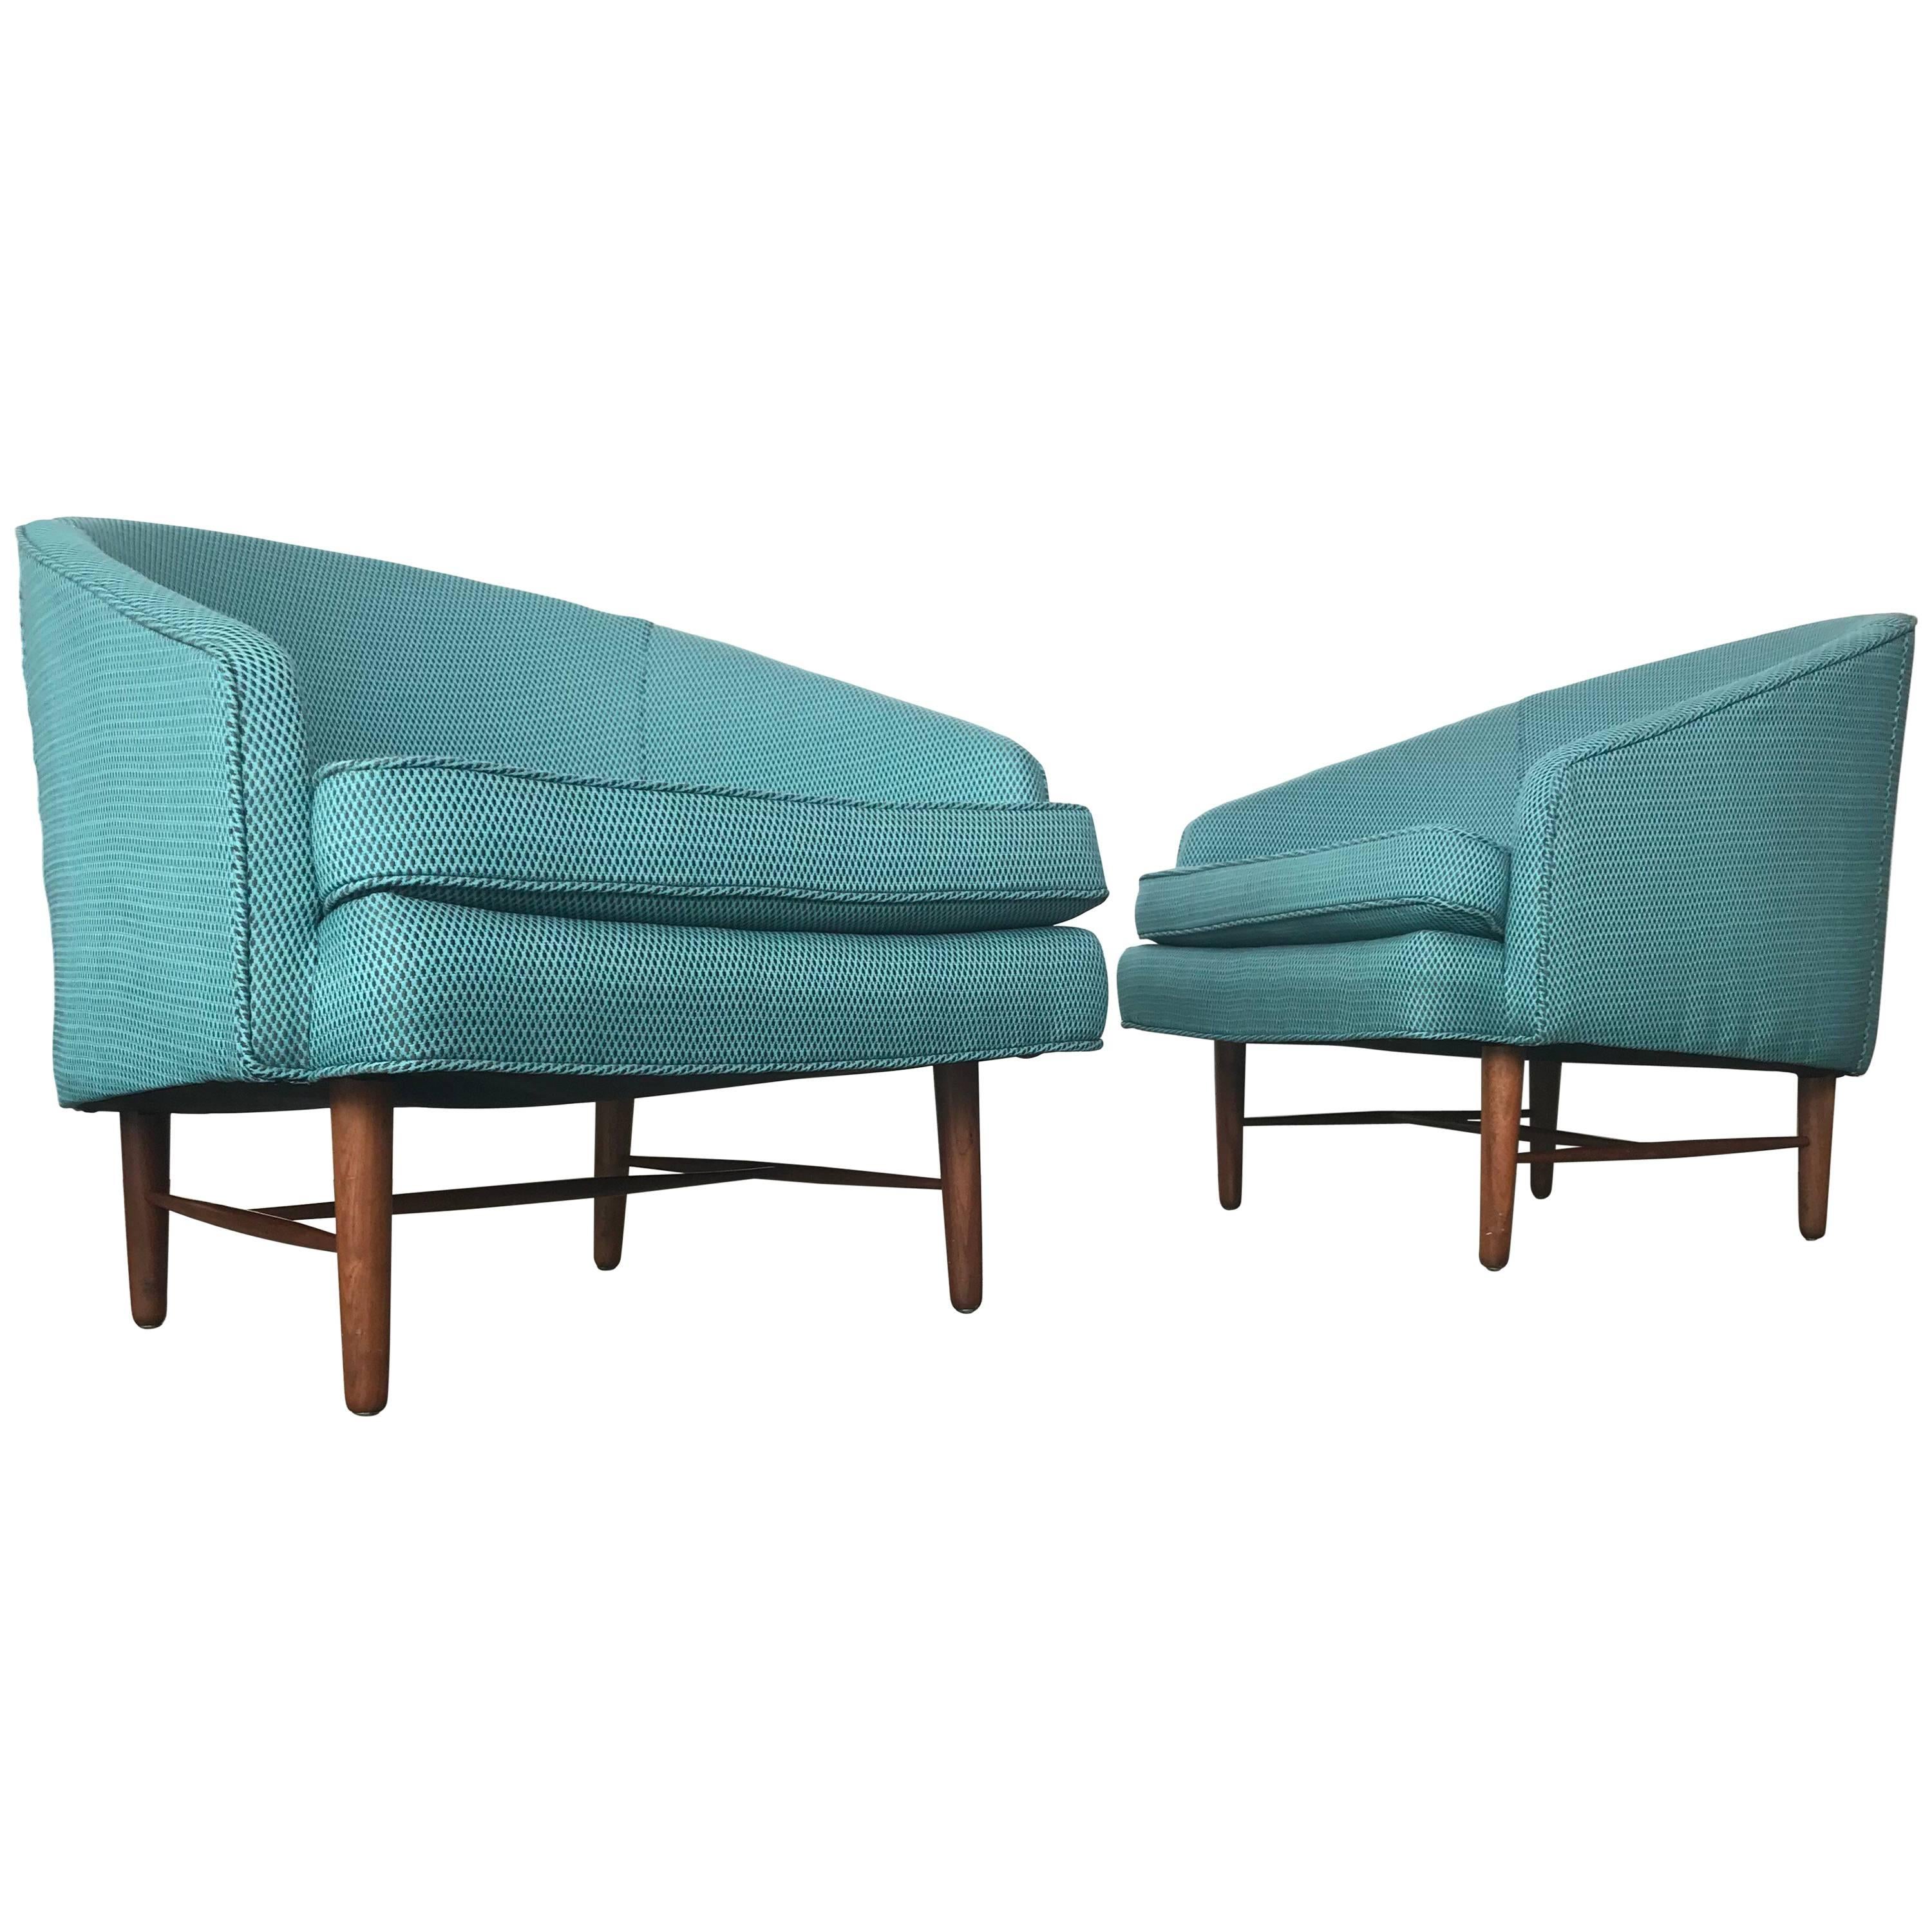 Newly Upholstered Danish Modern Lounge Chairs